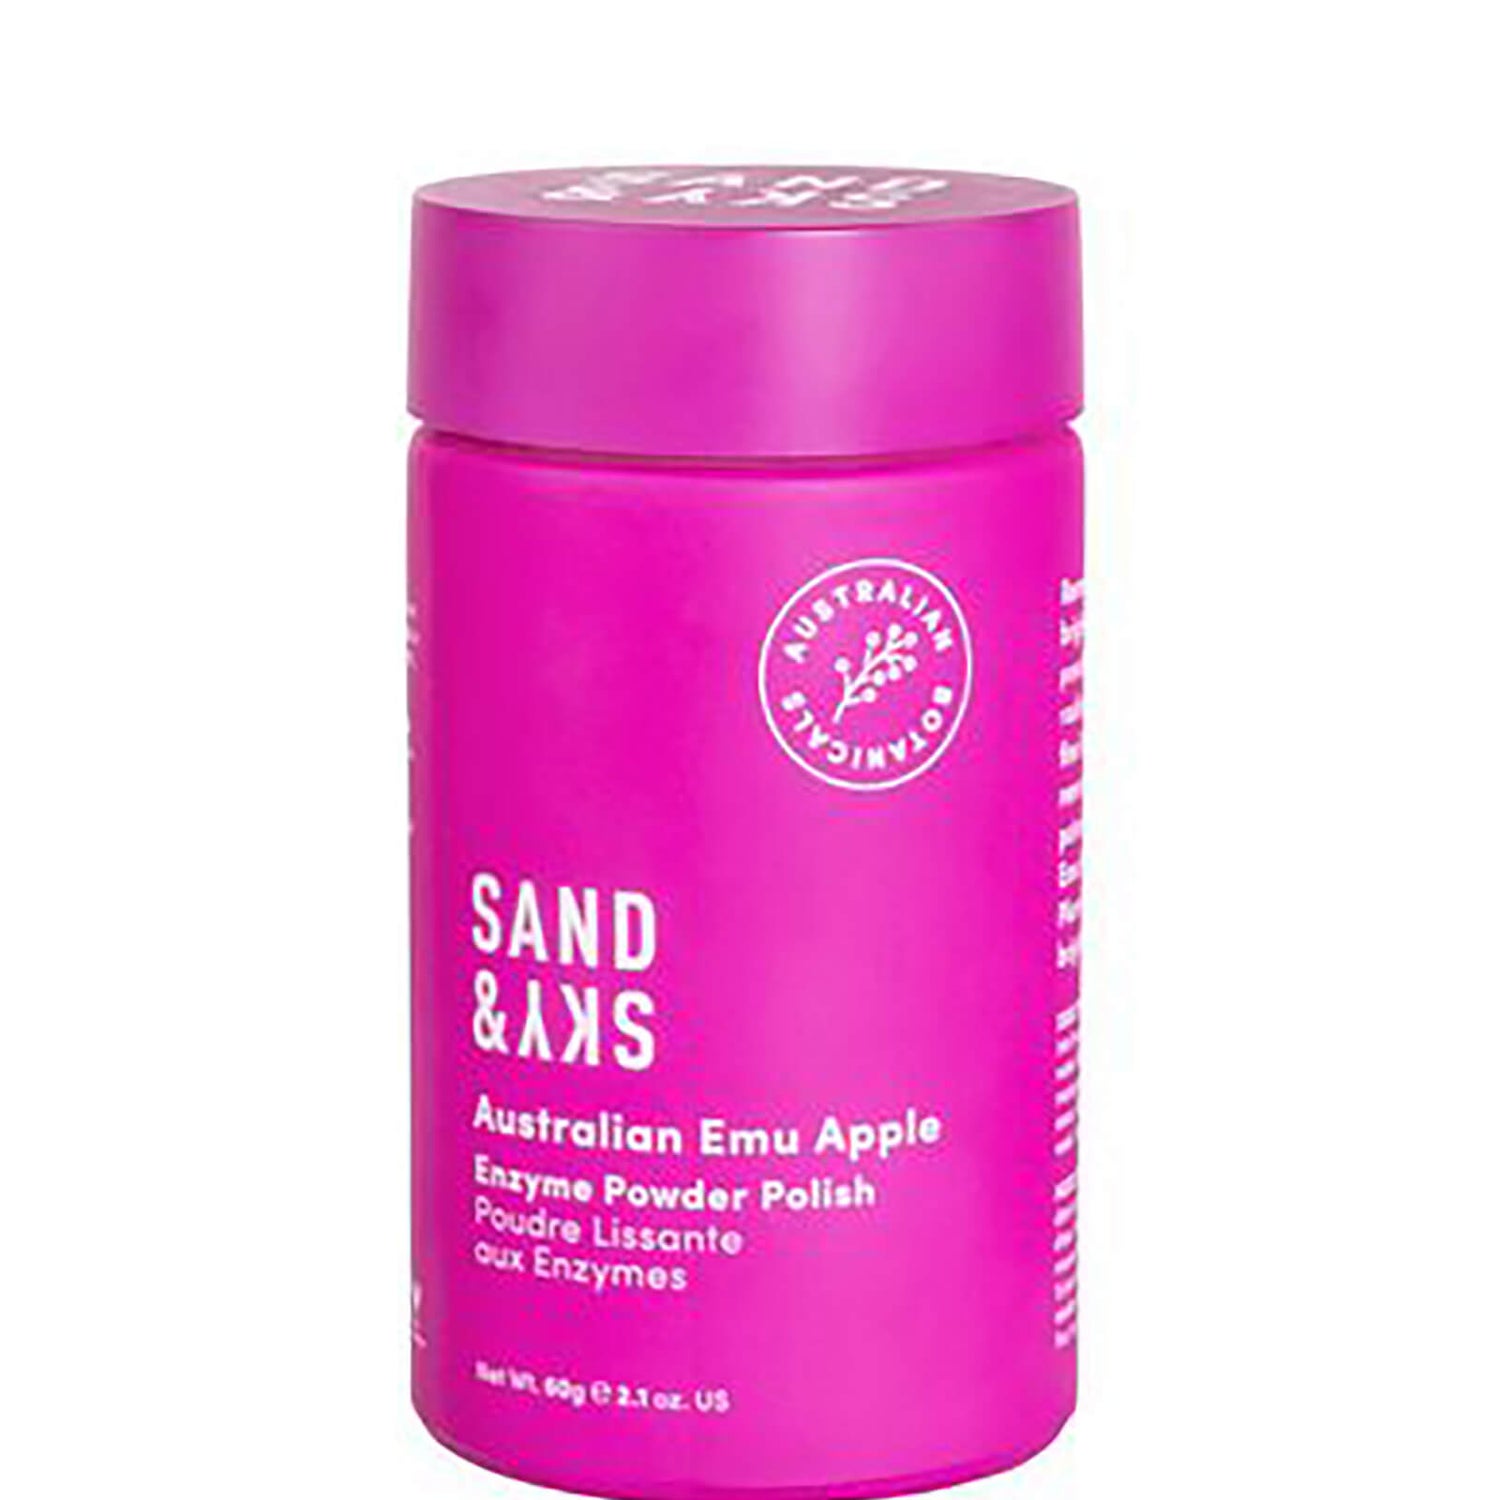 Sand&Sky Enzyme Powder Polish